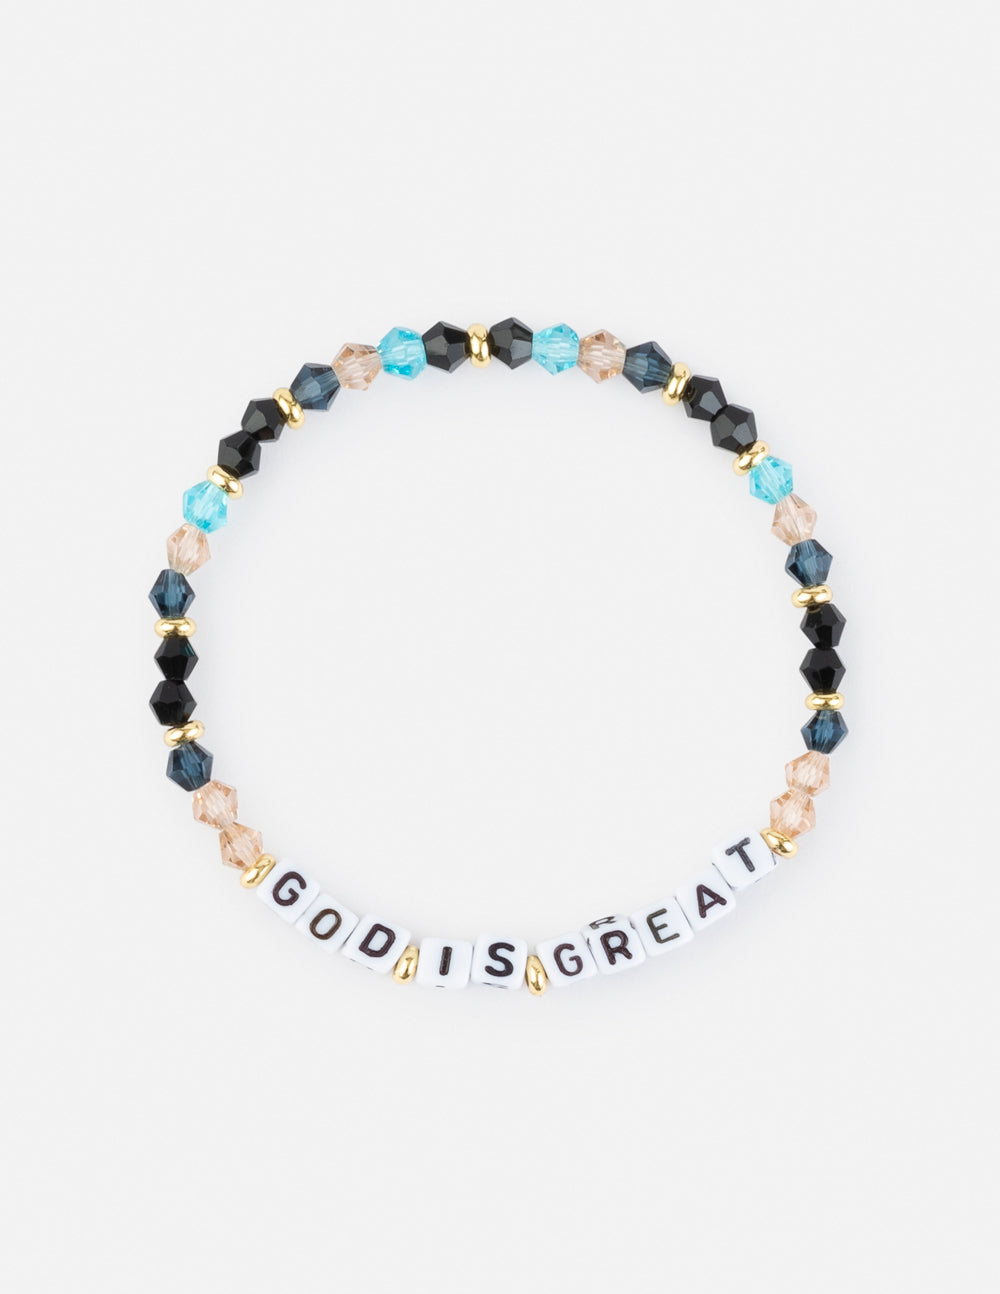 God Loves You Letter Bracelet, Christian Jewelry